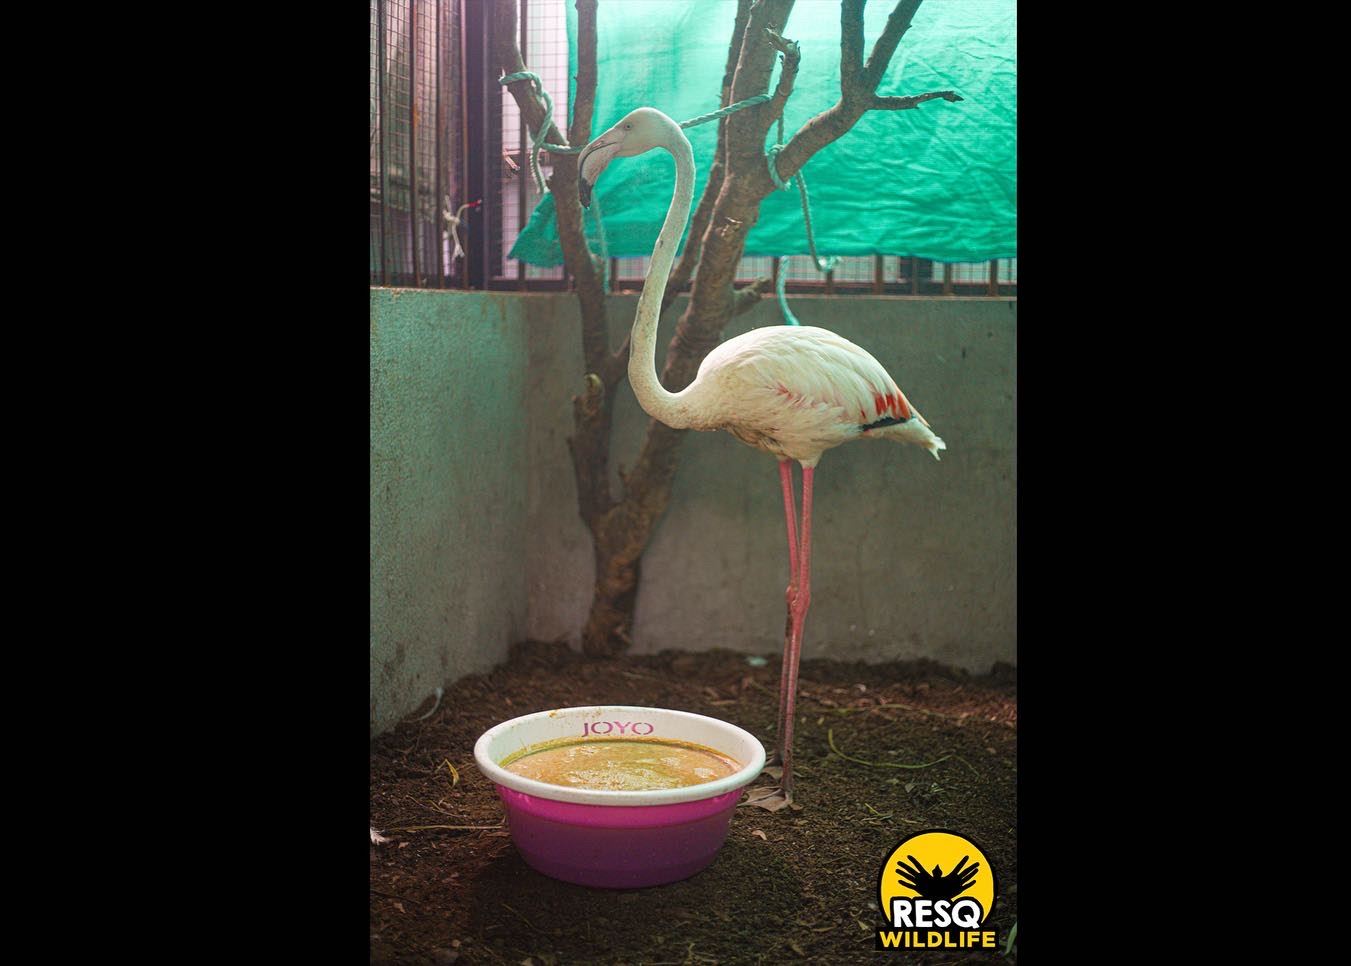 A Greater Flamingo under rehabilitation at RESQ TTC